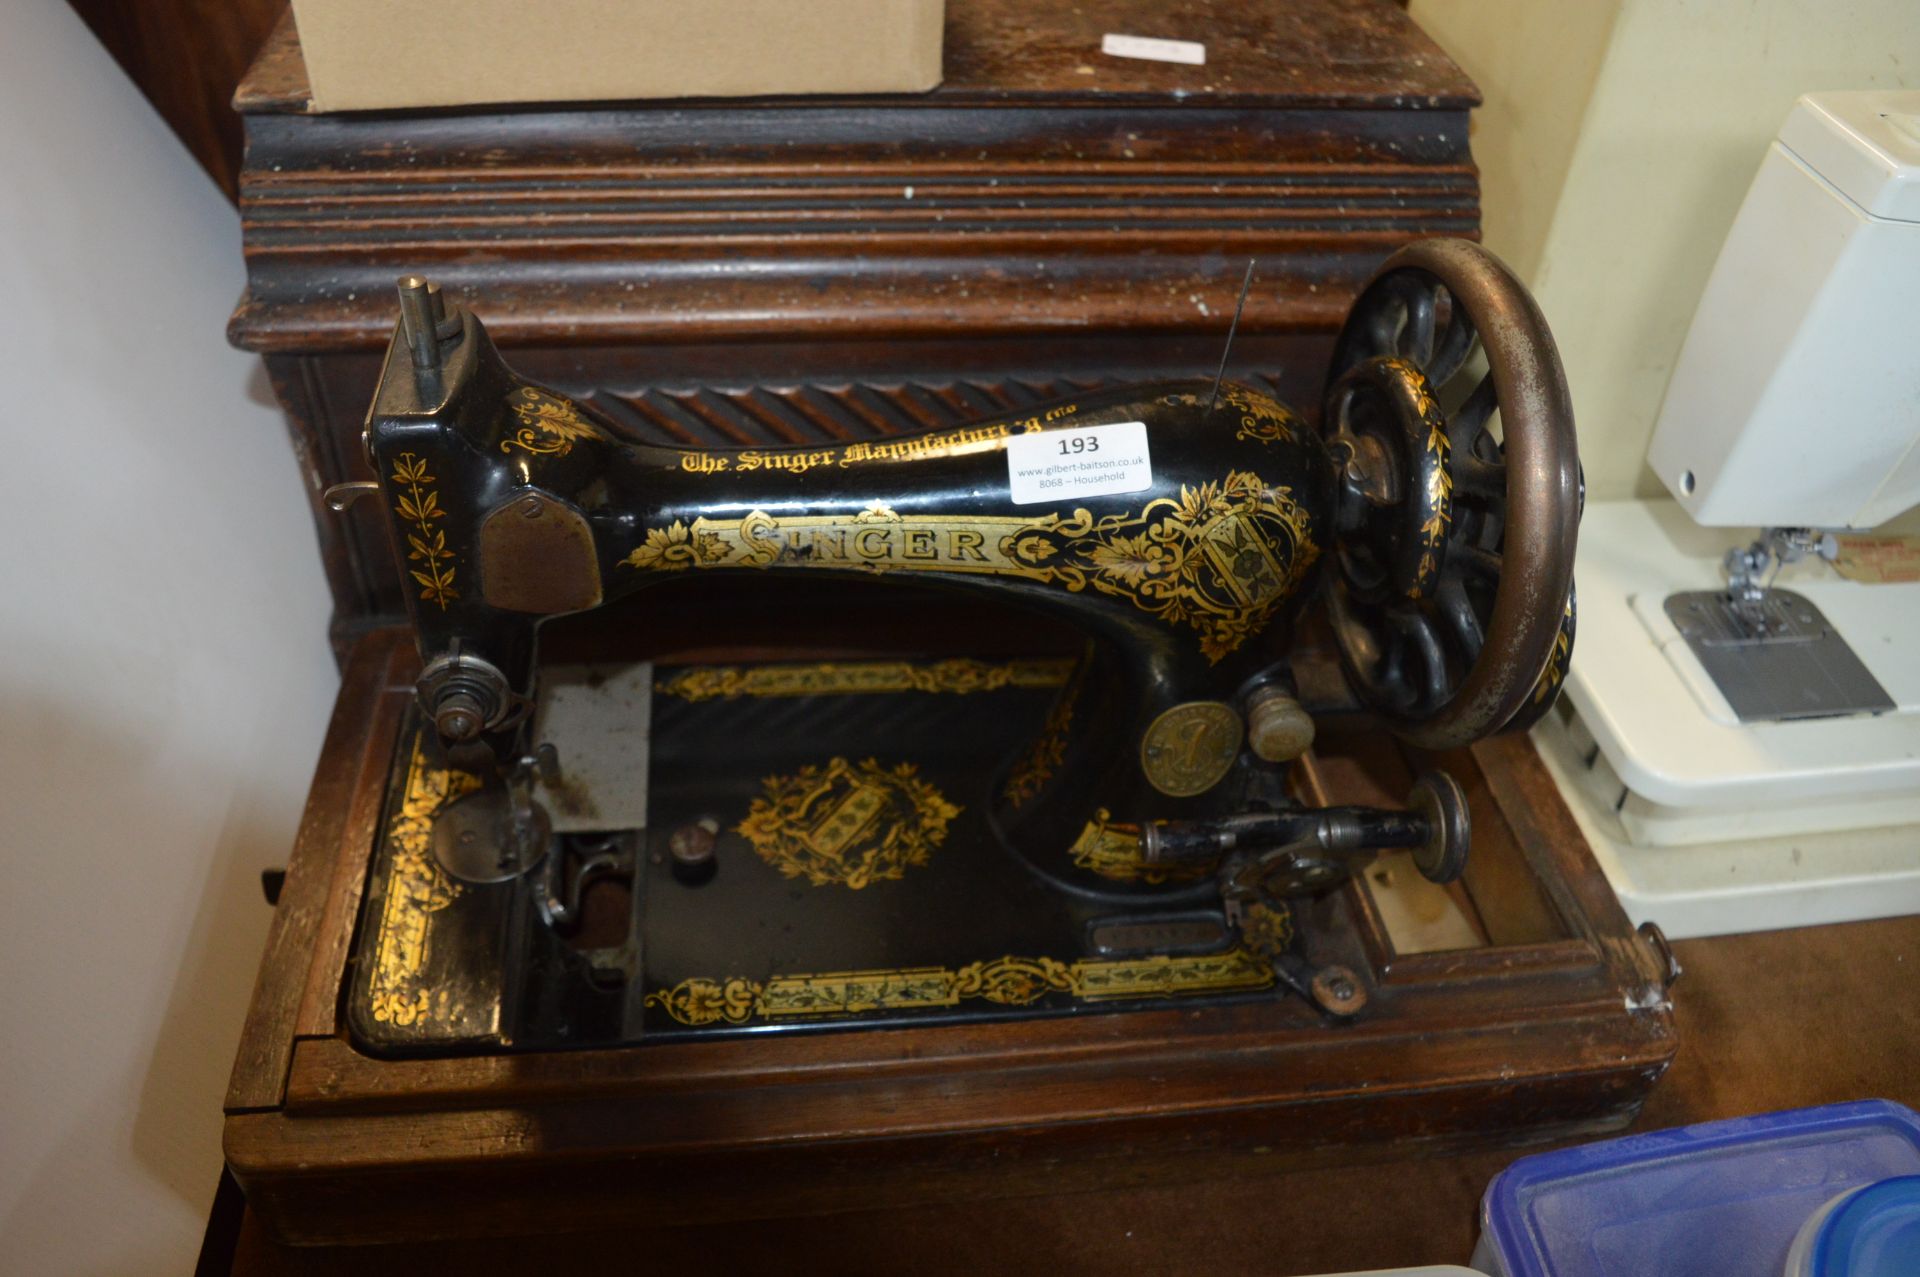 Vintage Singer Sewing Machine in Wooden Case plus